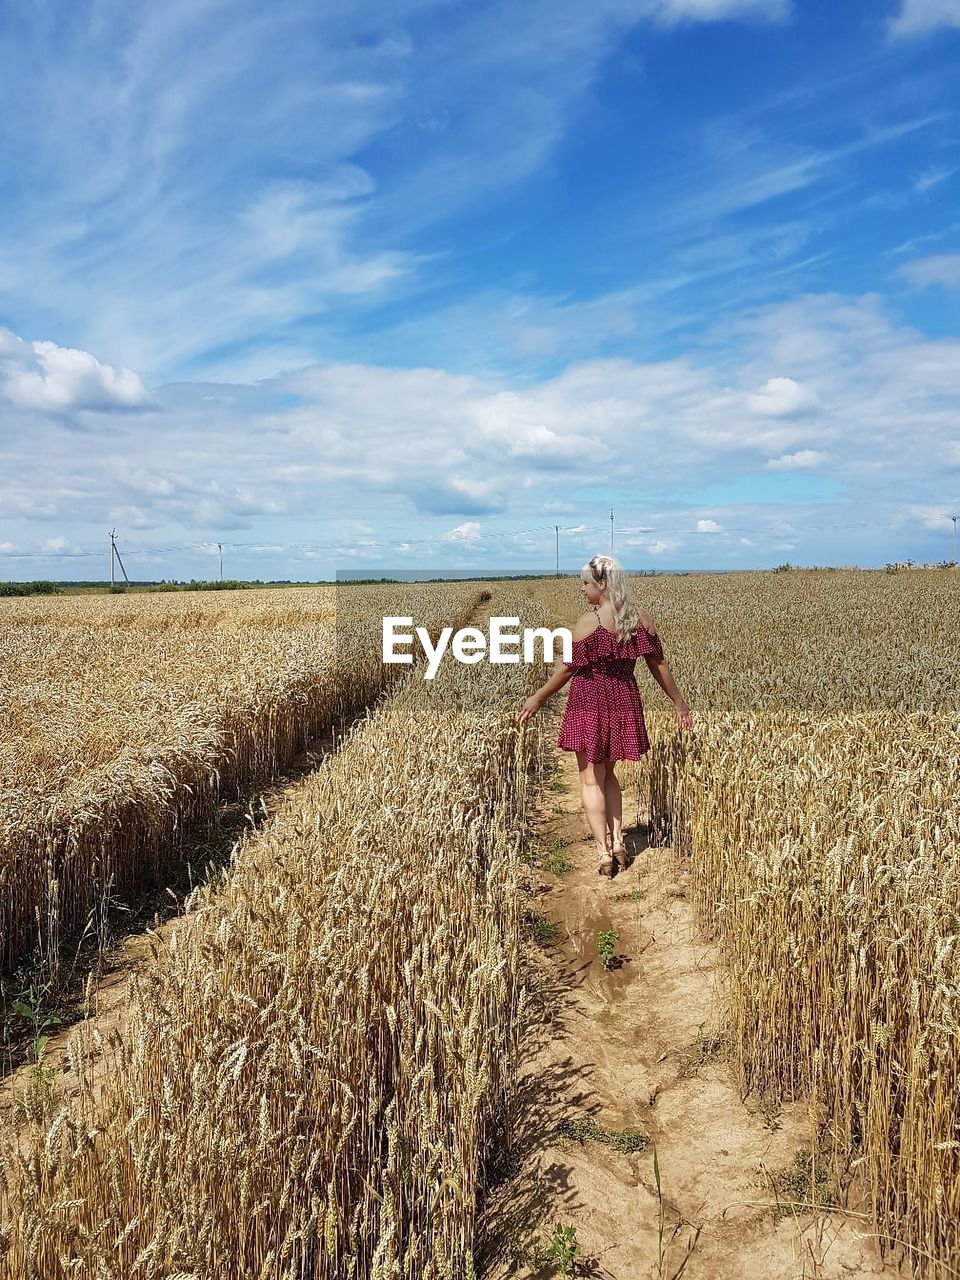 A girl is walking through a wheat field 